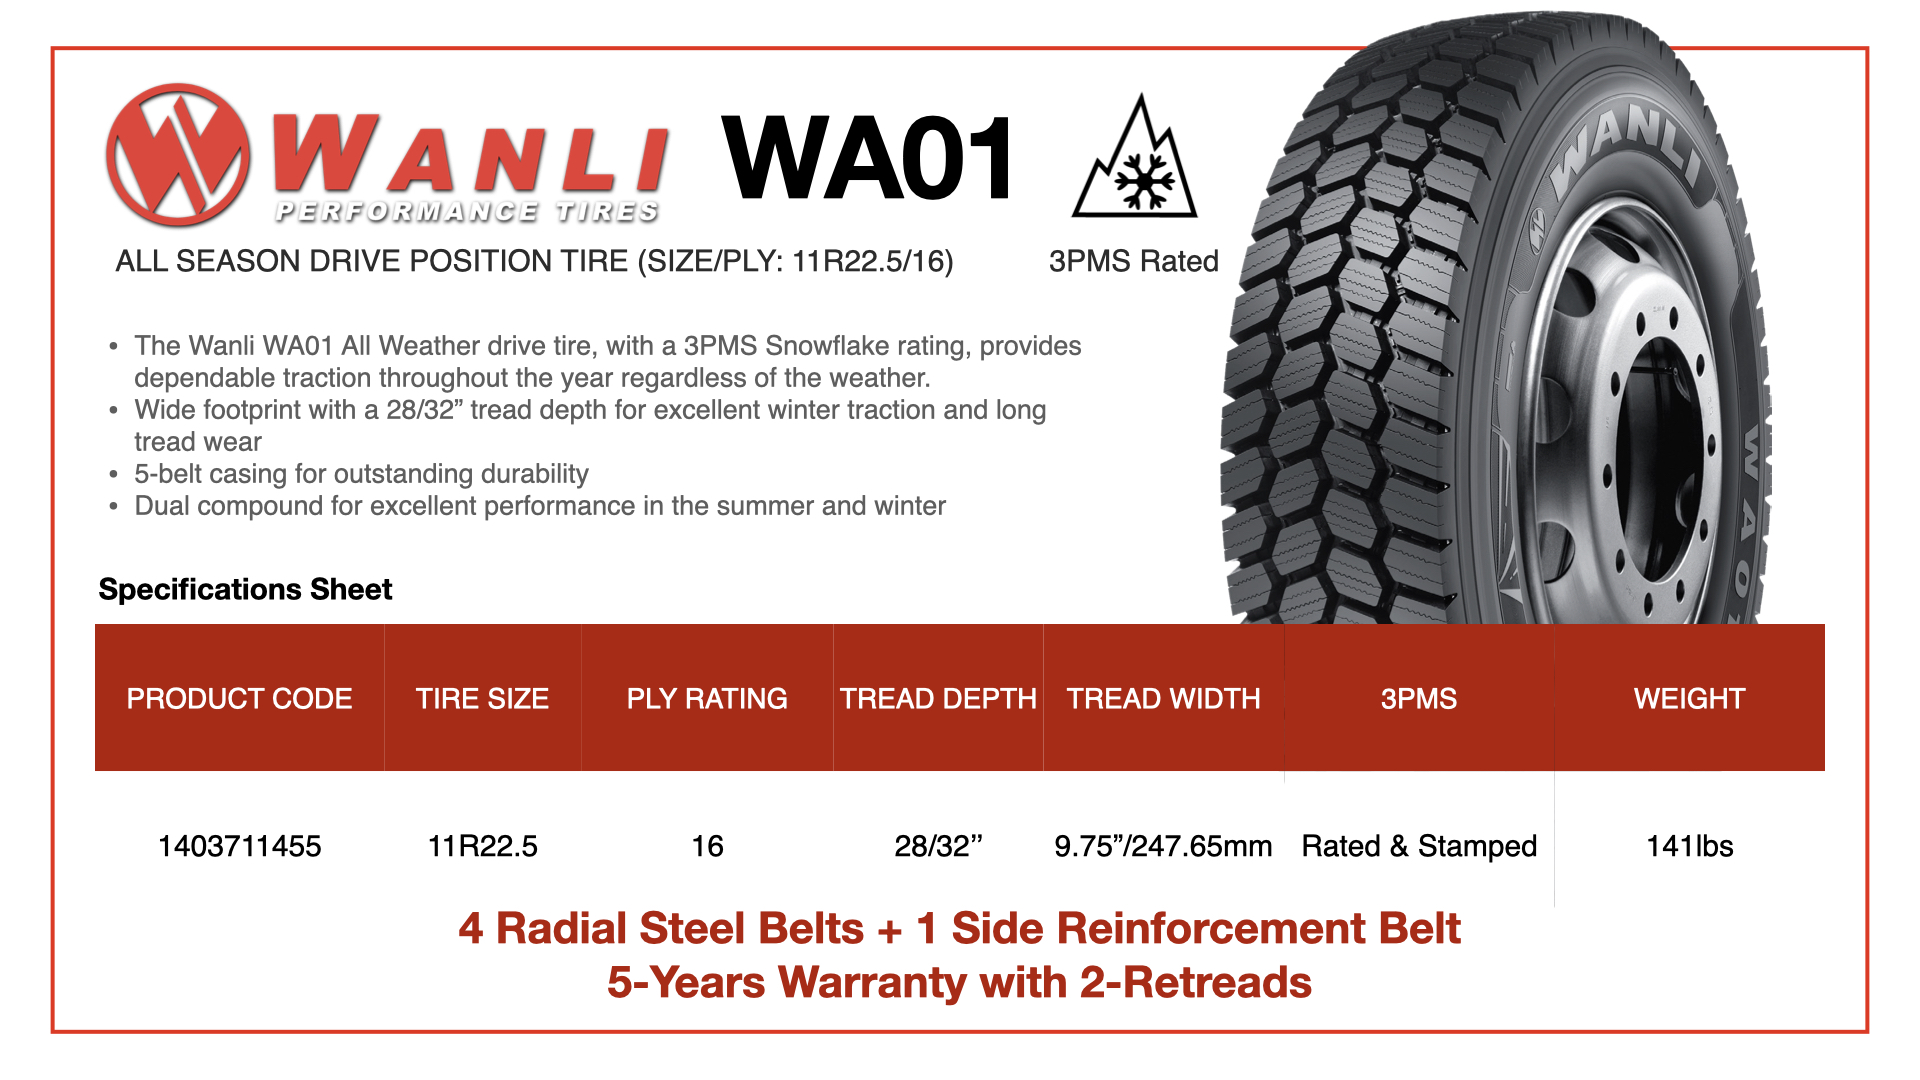 Wanli WA01 11R22.5 Specifications Sheet